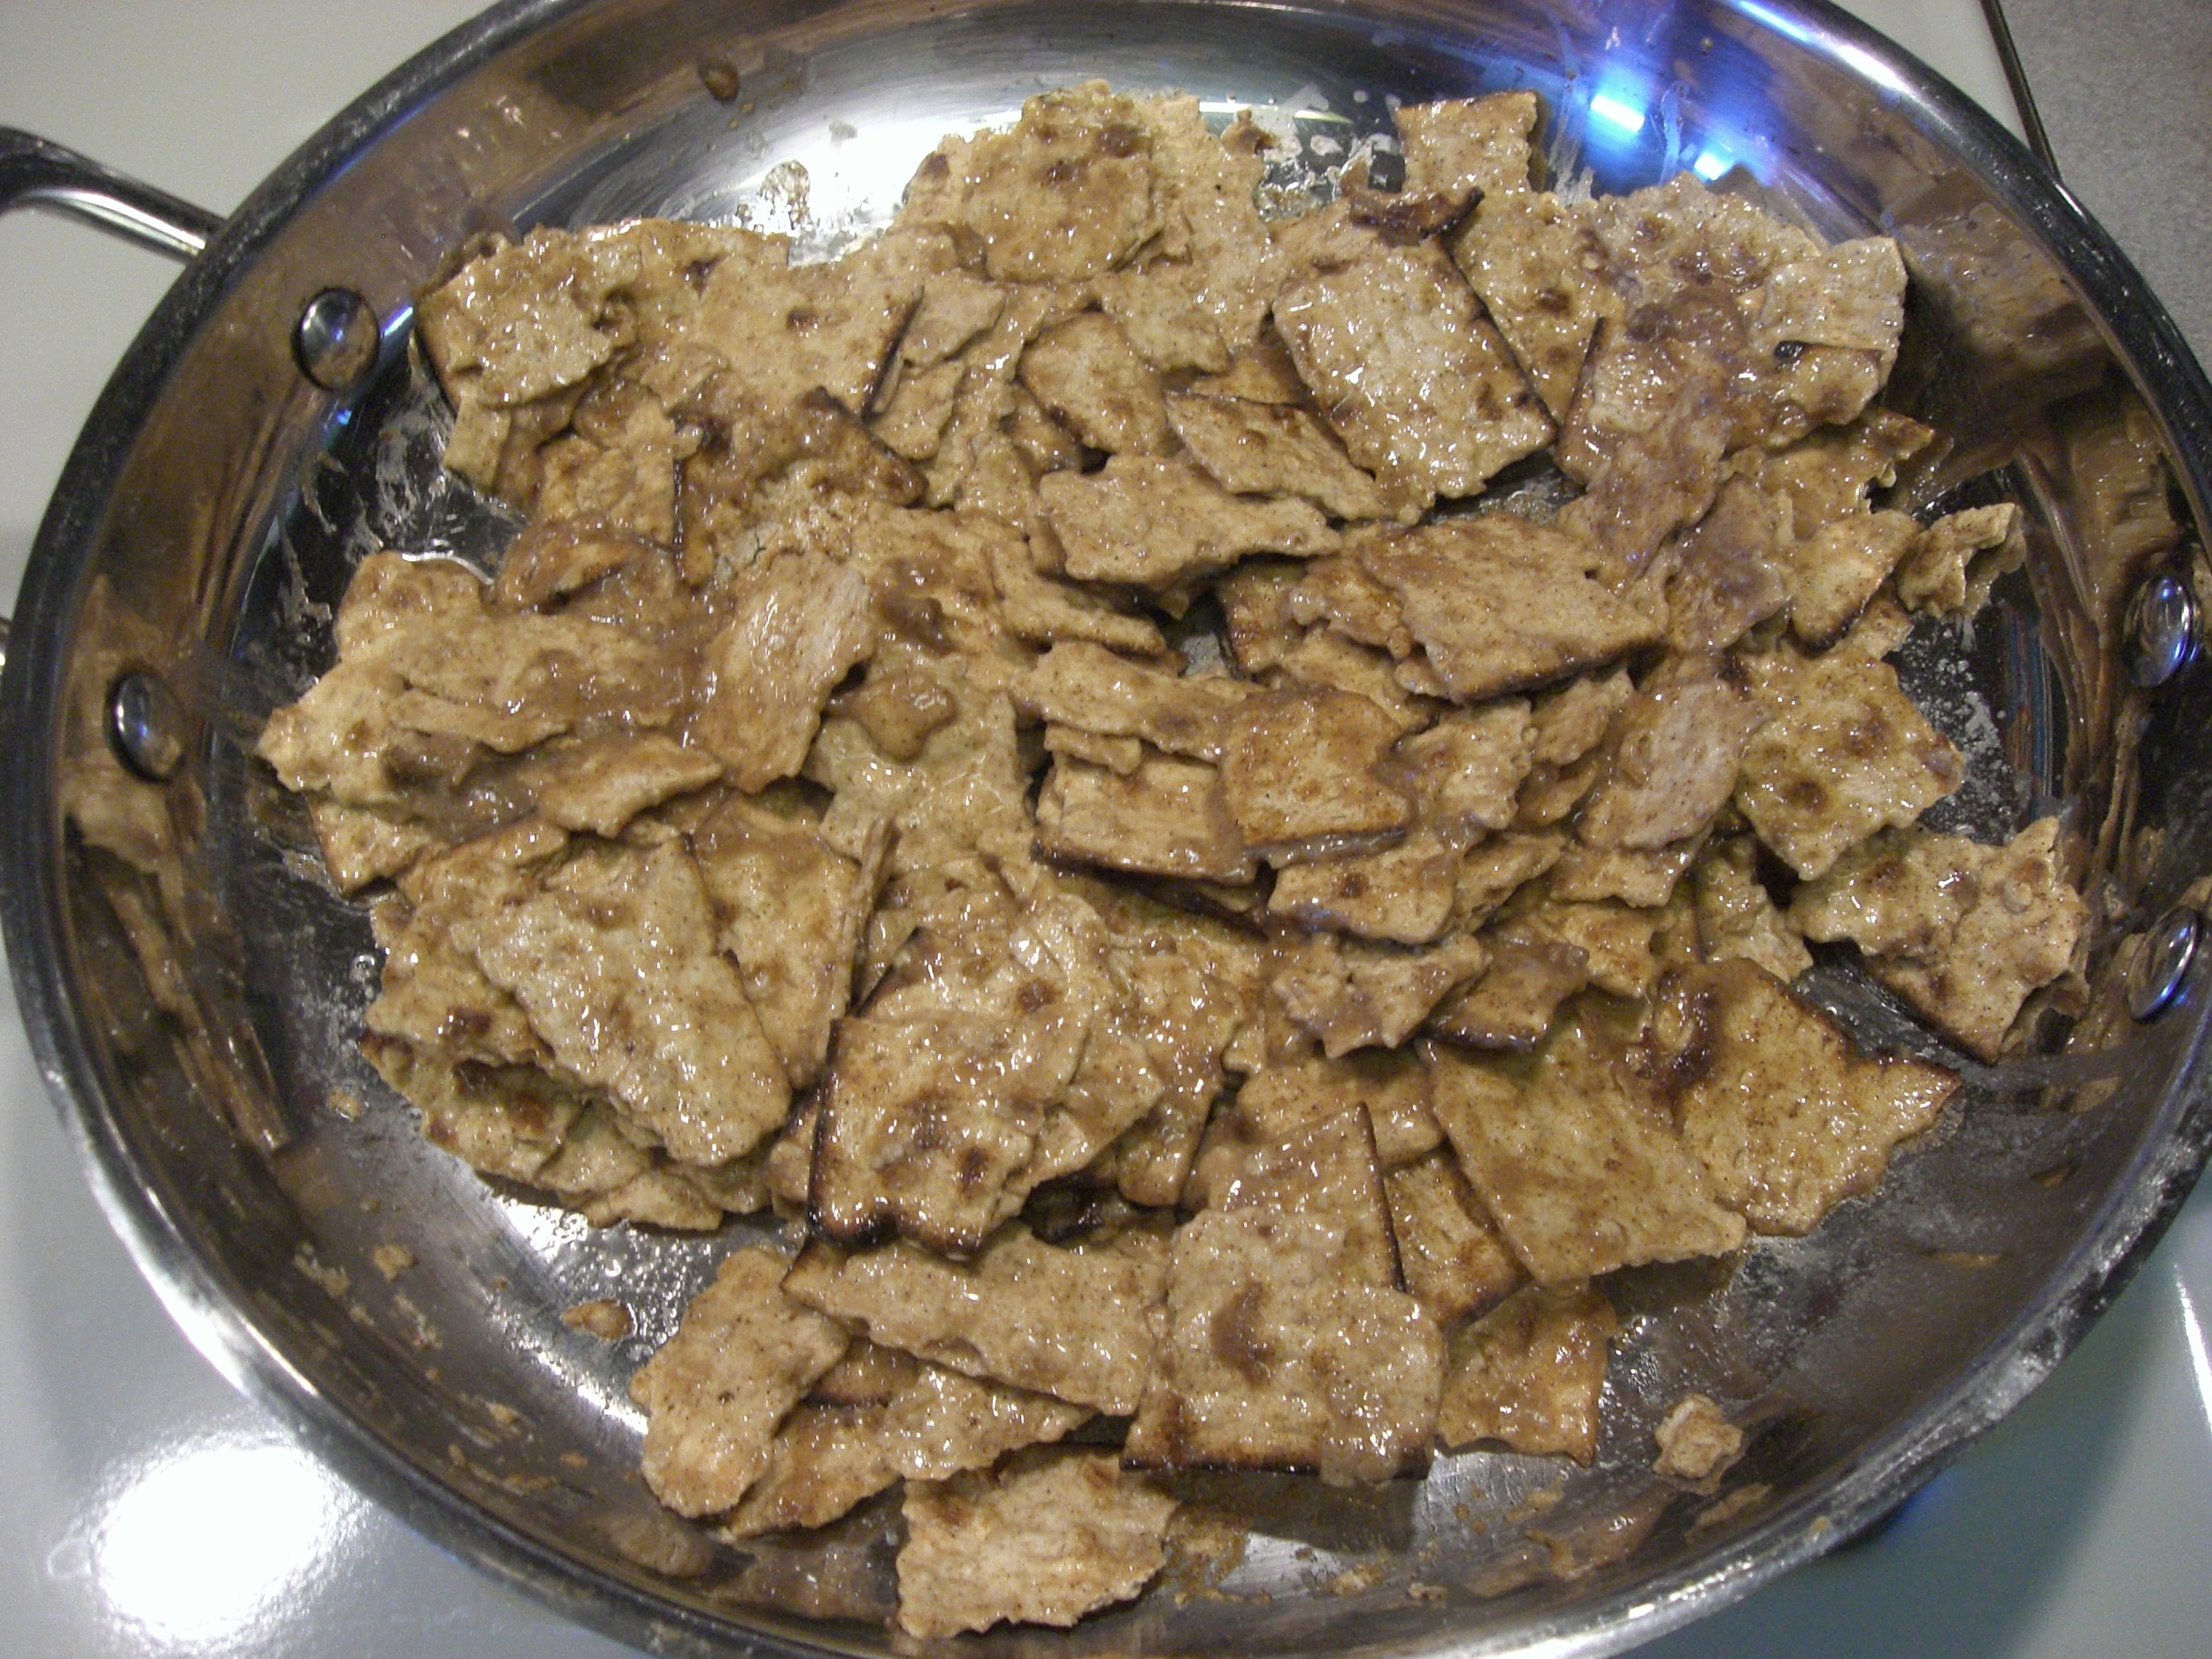 Vegan matza brei sizzling in the pan.